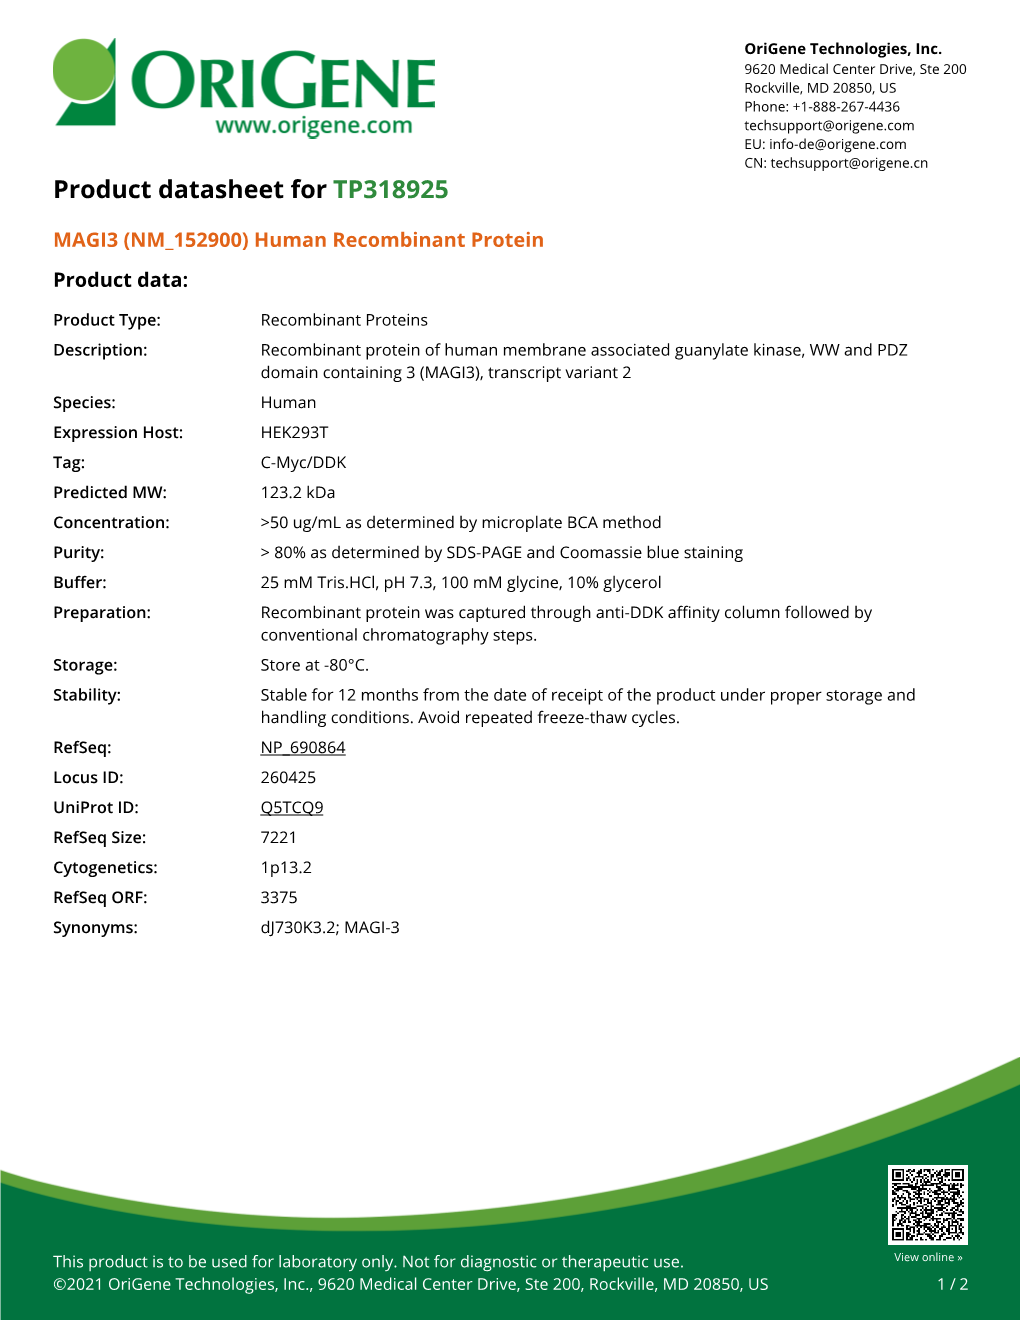 MAGI3 (NM 152900) Human Recombinant Protein Product Data